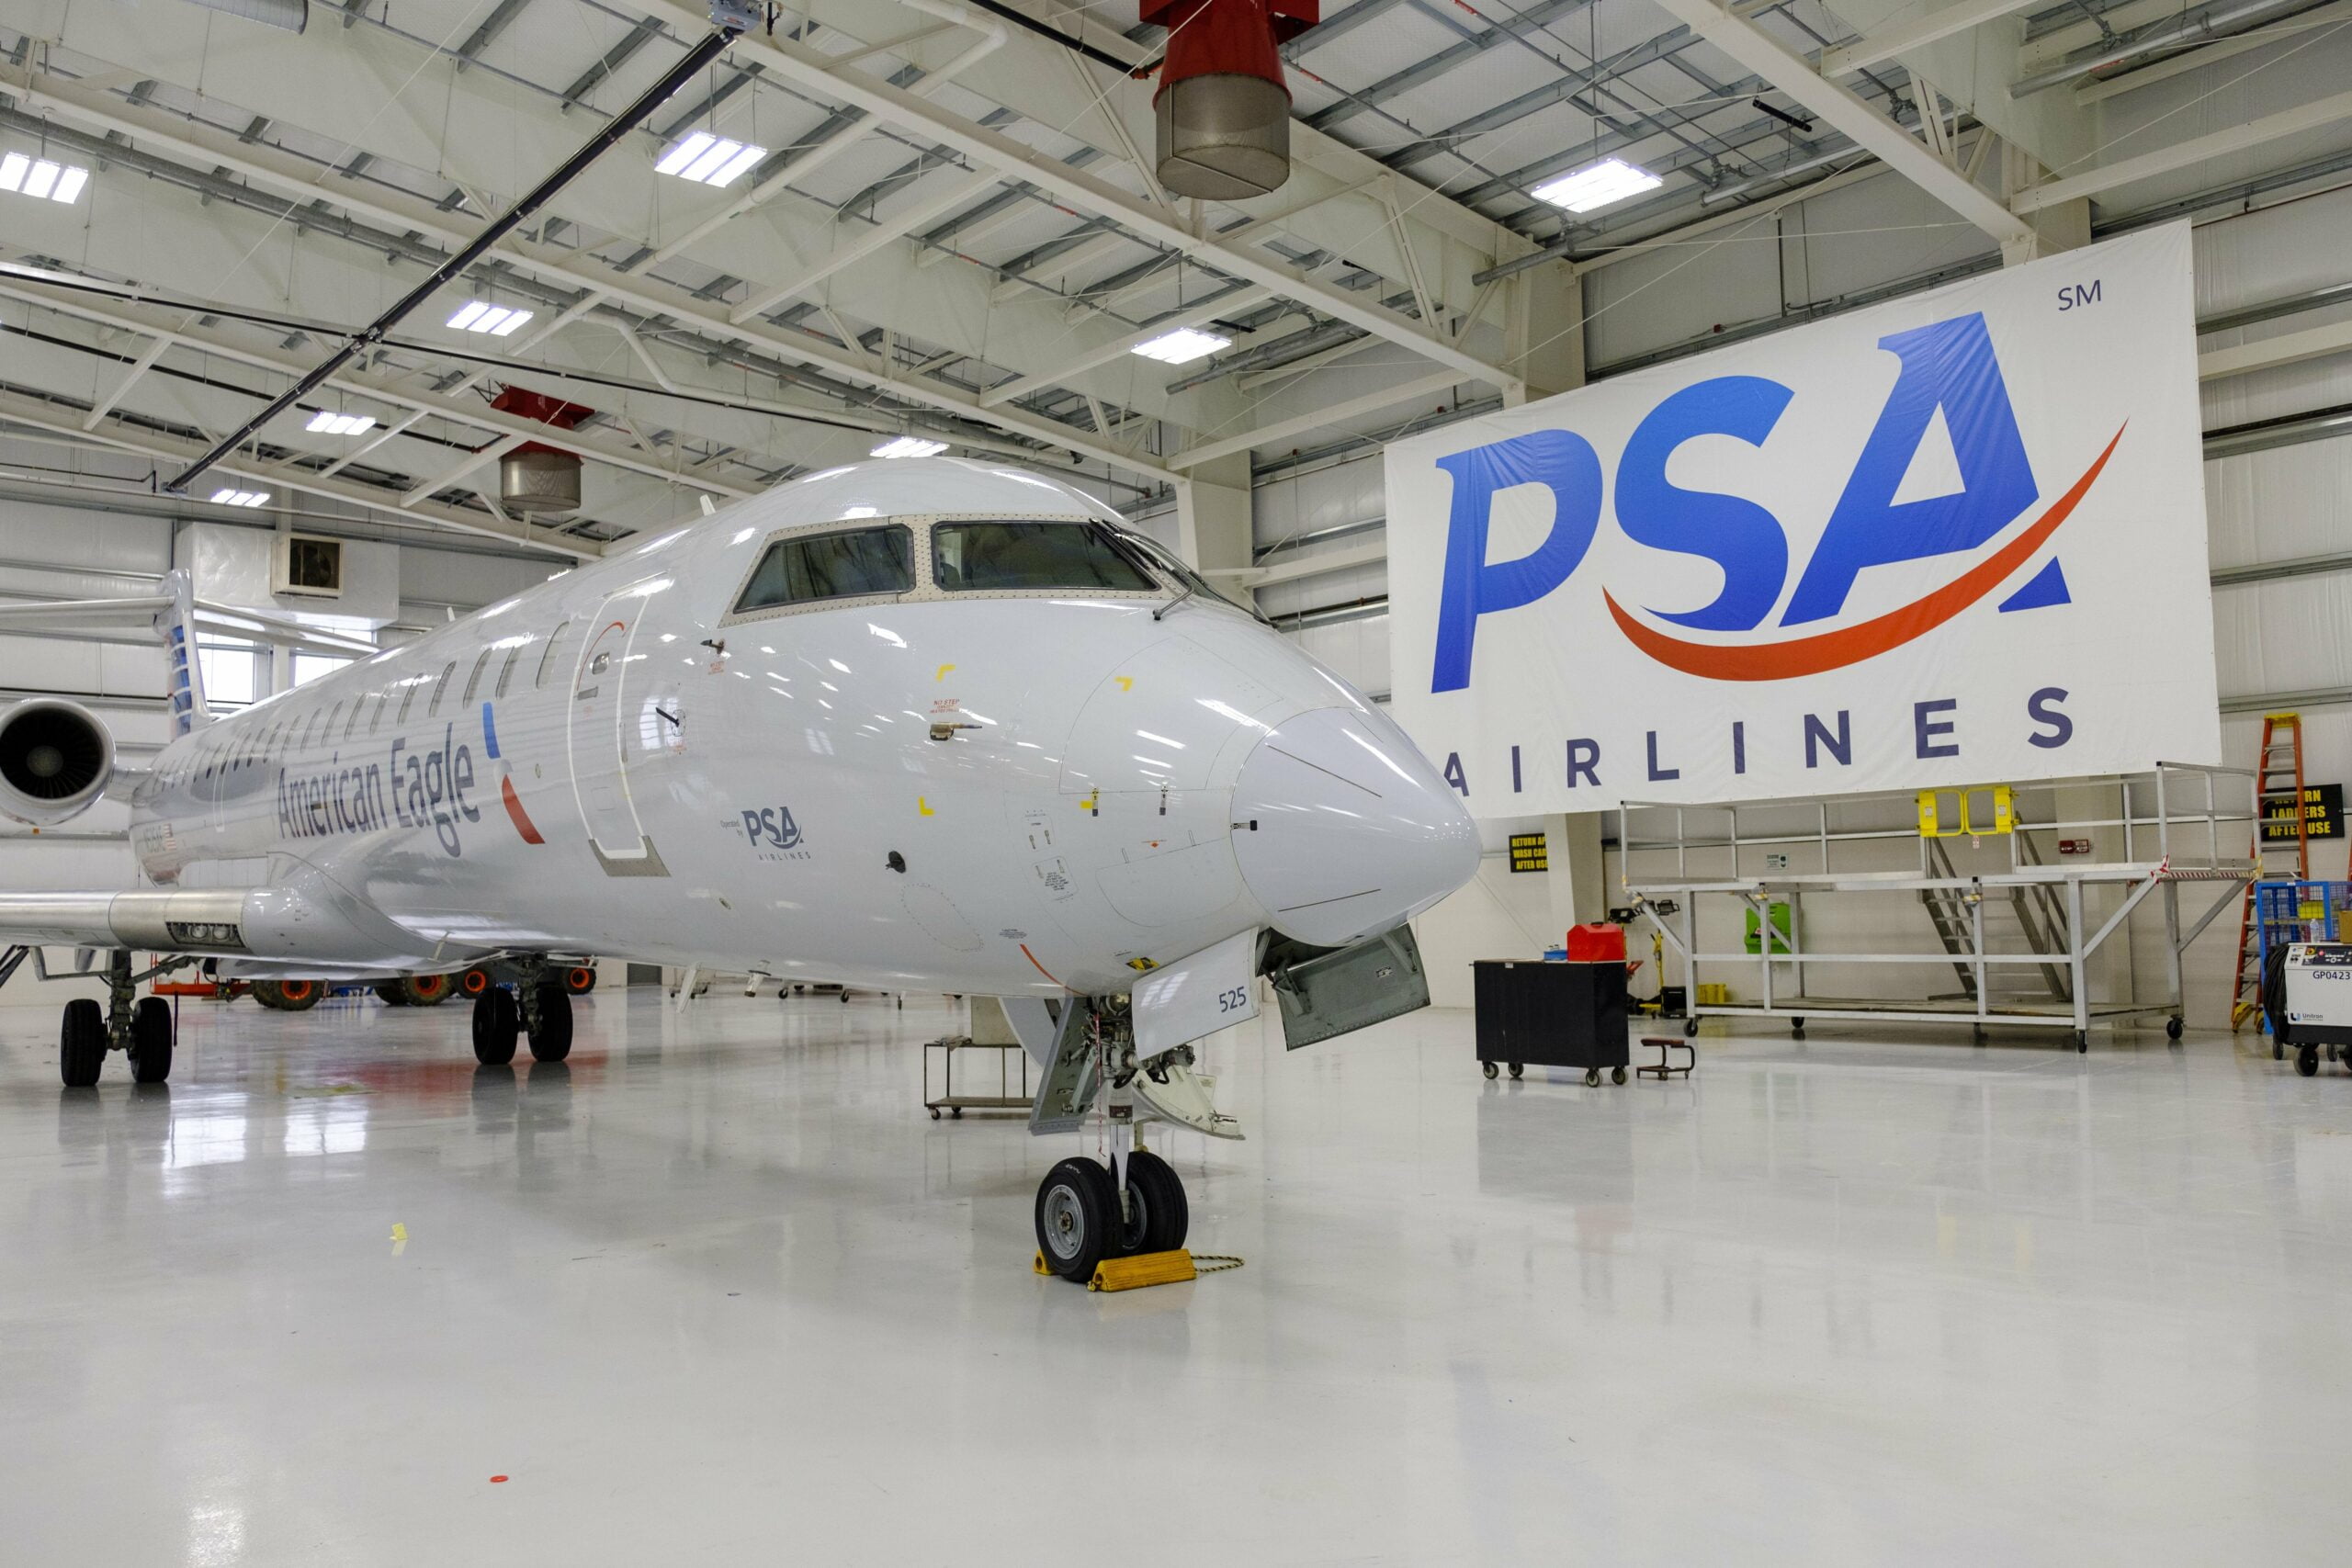 PSA Airlines extends $15,000 sign-on bonus for Aviation Maintenance Technicians who join Ohio maintenance base